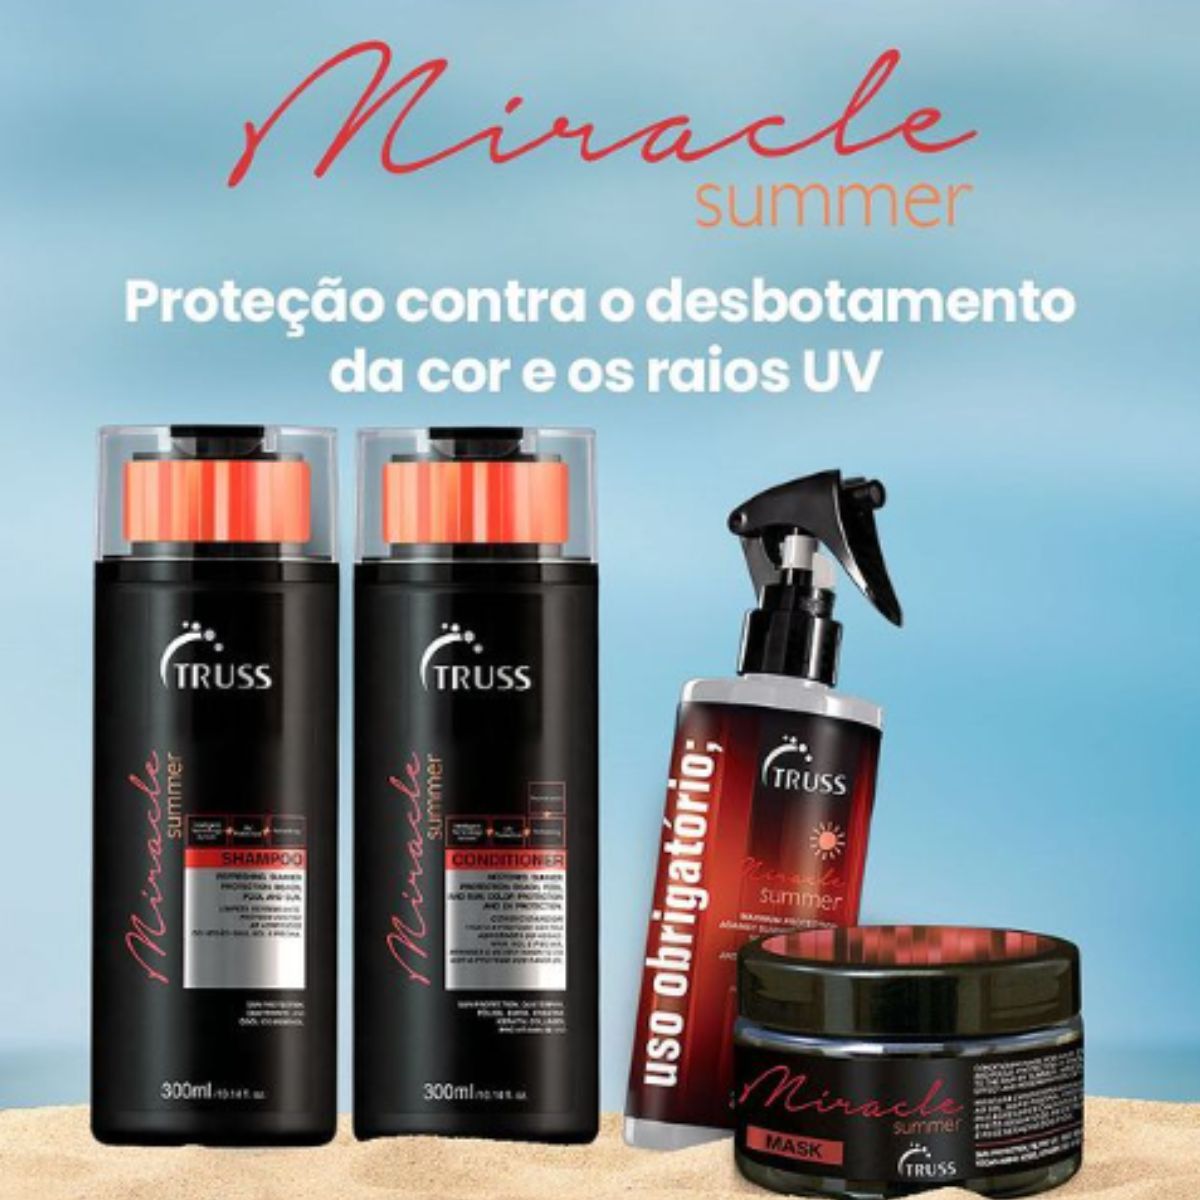 Shampoo Miracle Summer 300ml - Truss